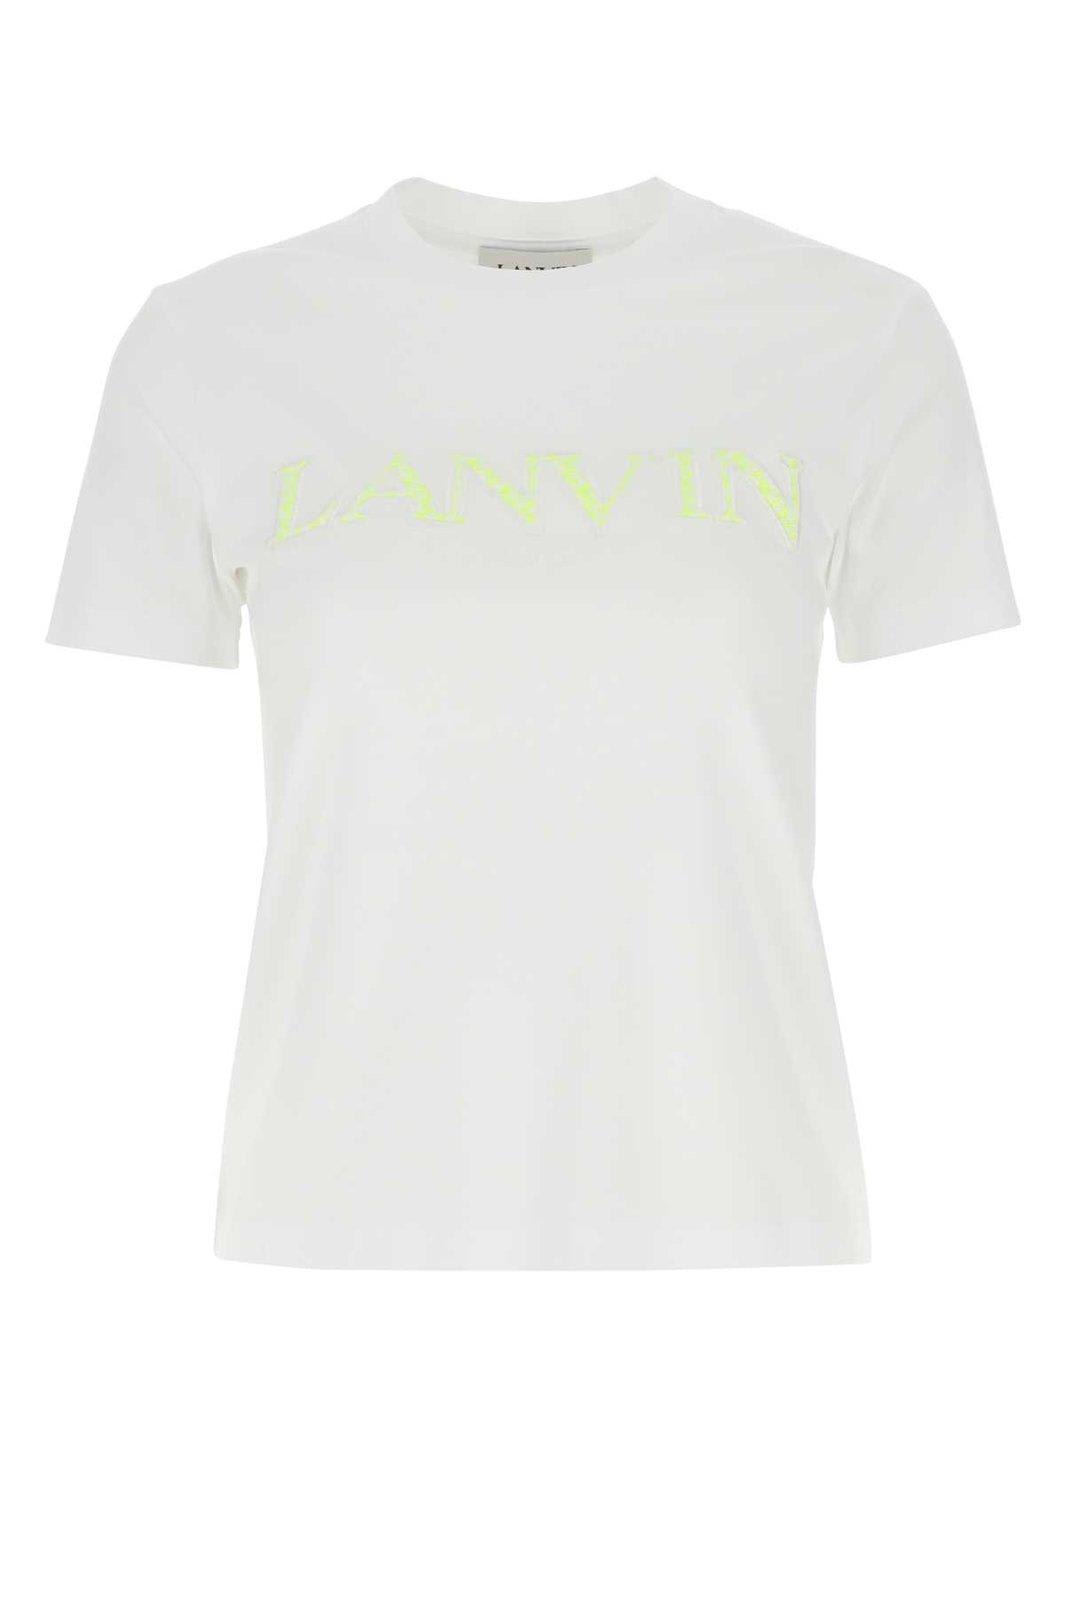 Lanvin Logo Embroidered Crewneck T-shirt